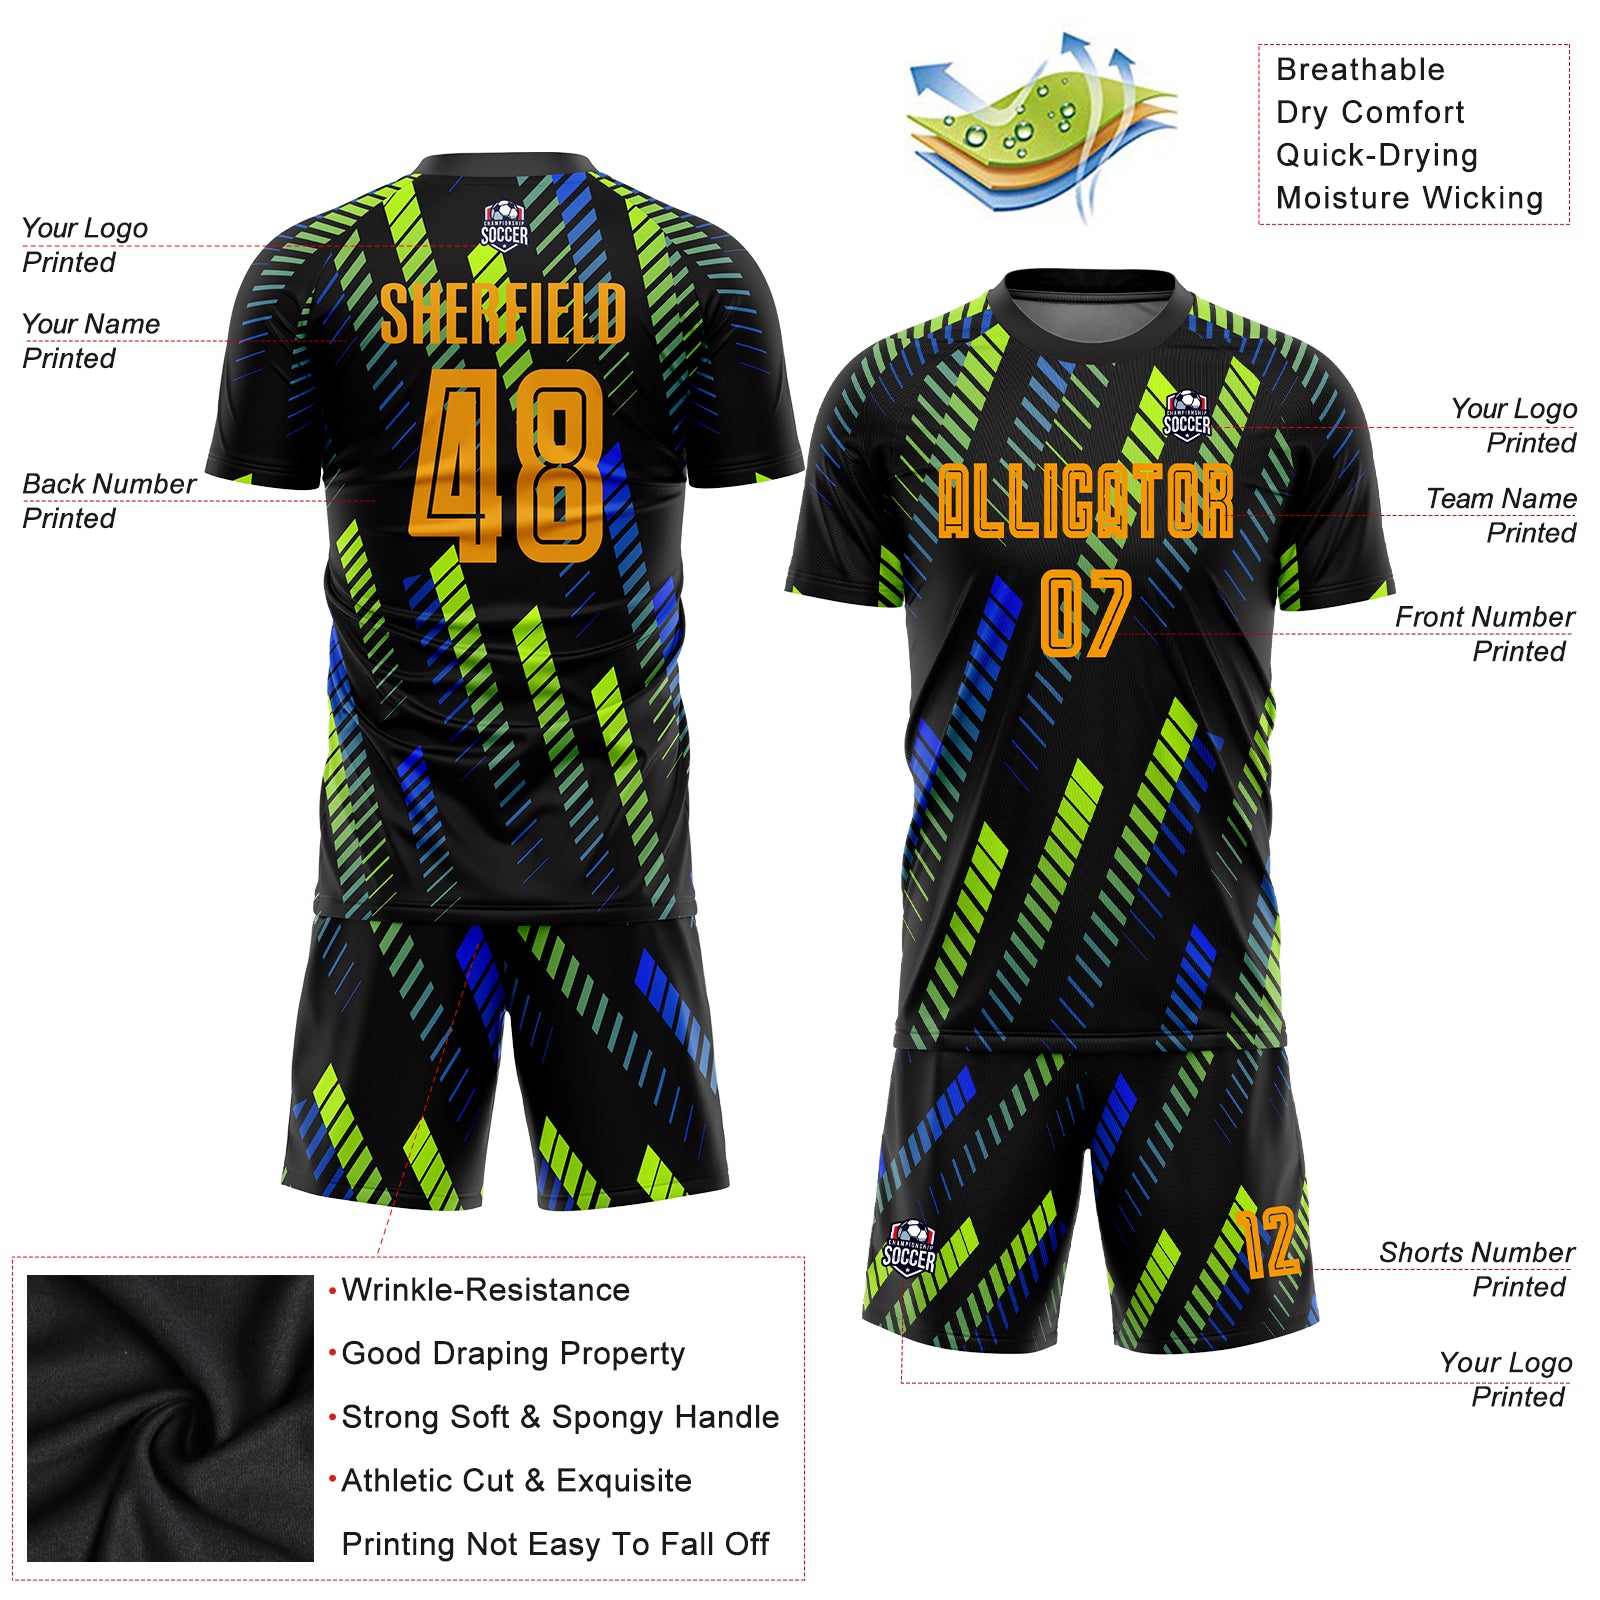 Custom Dye Sublimated Jerseys & Uniforms - Custom Team Jerseys